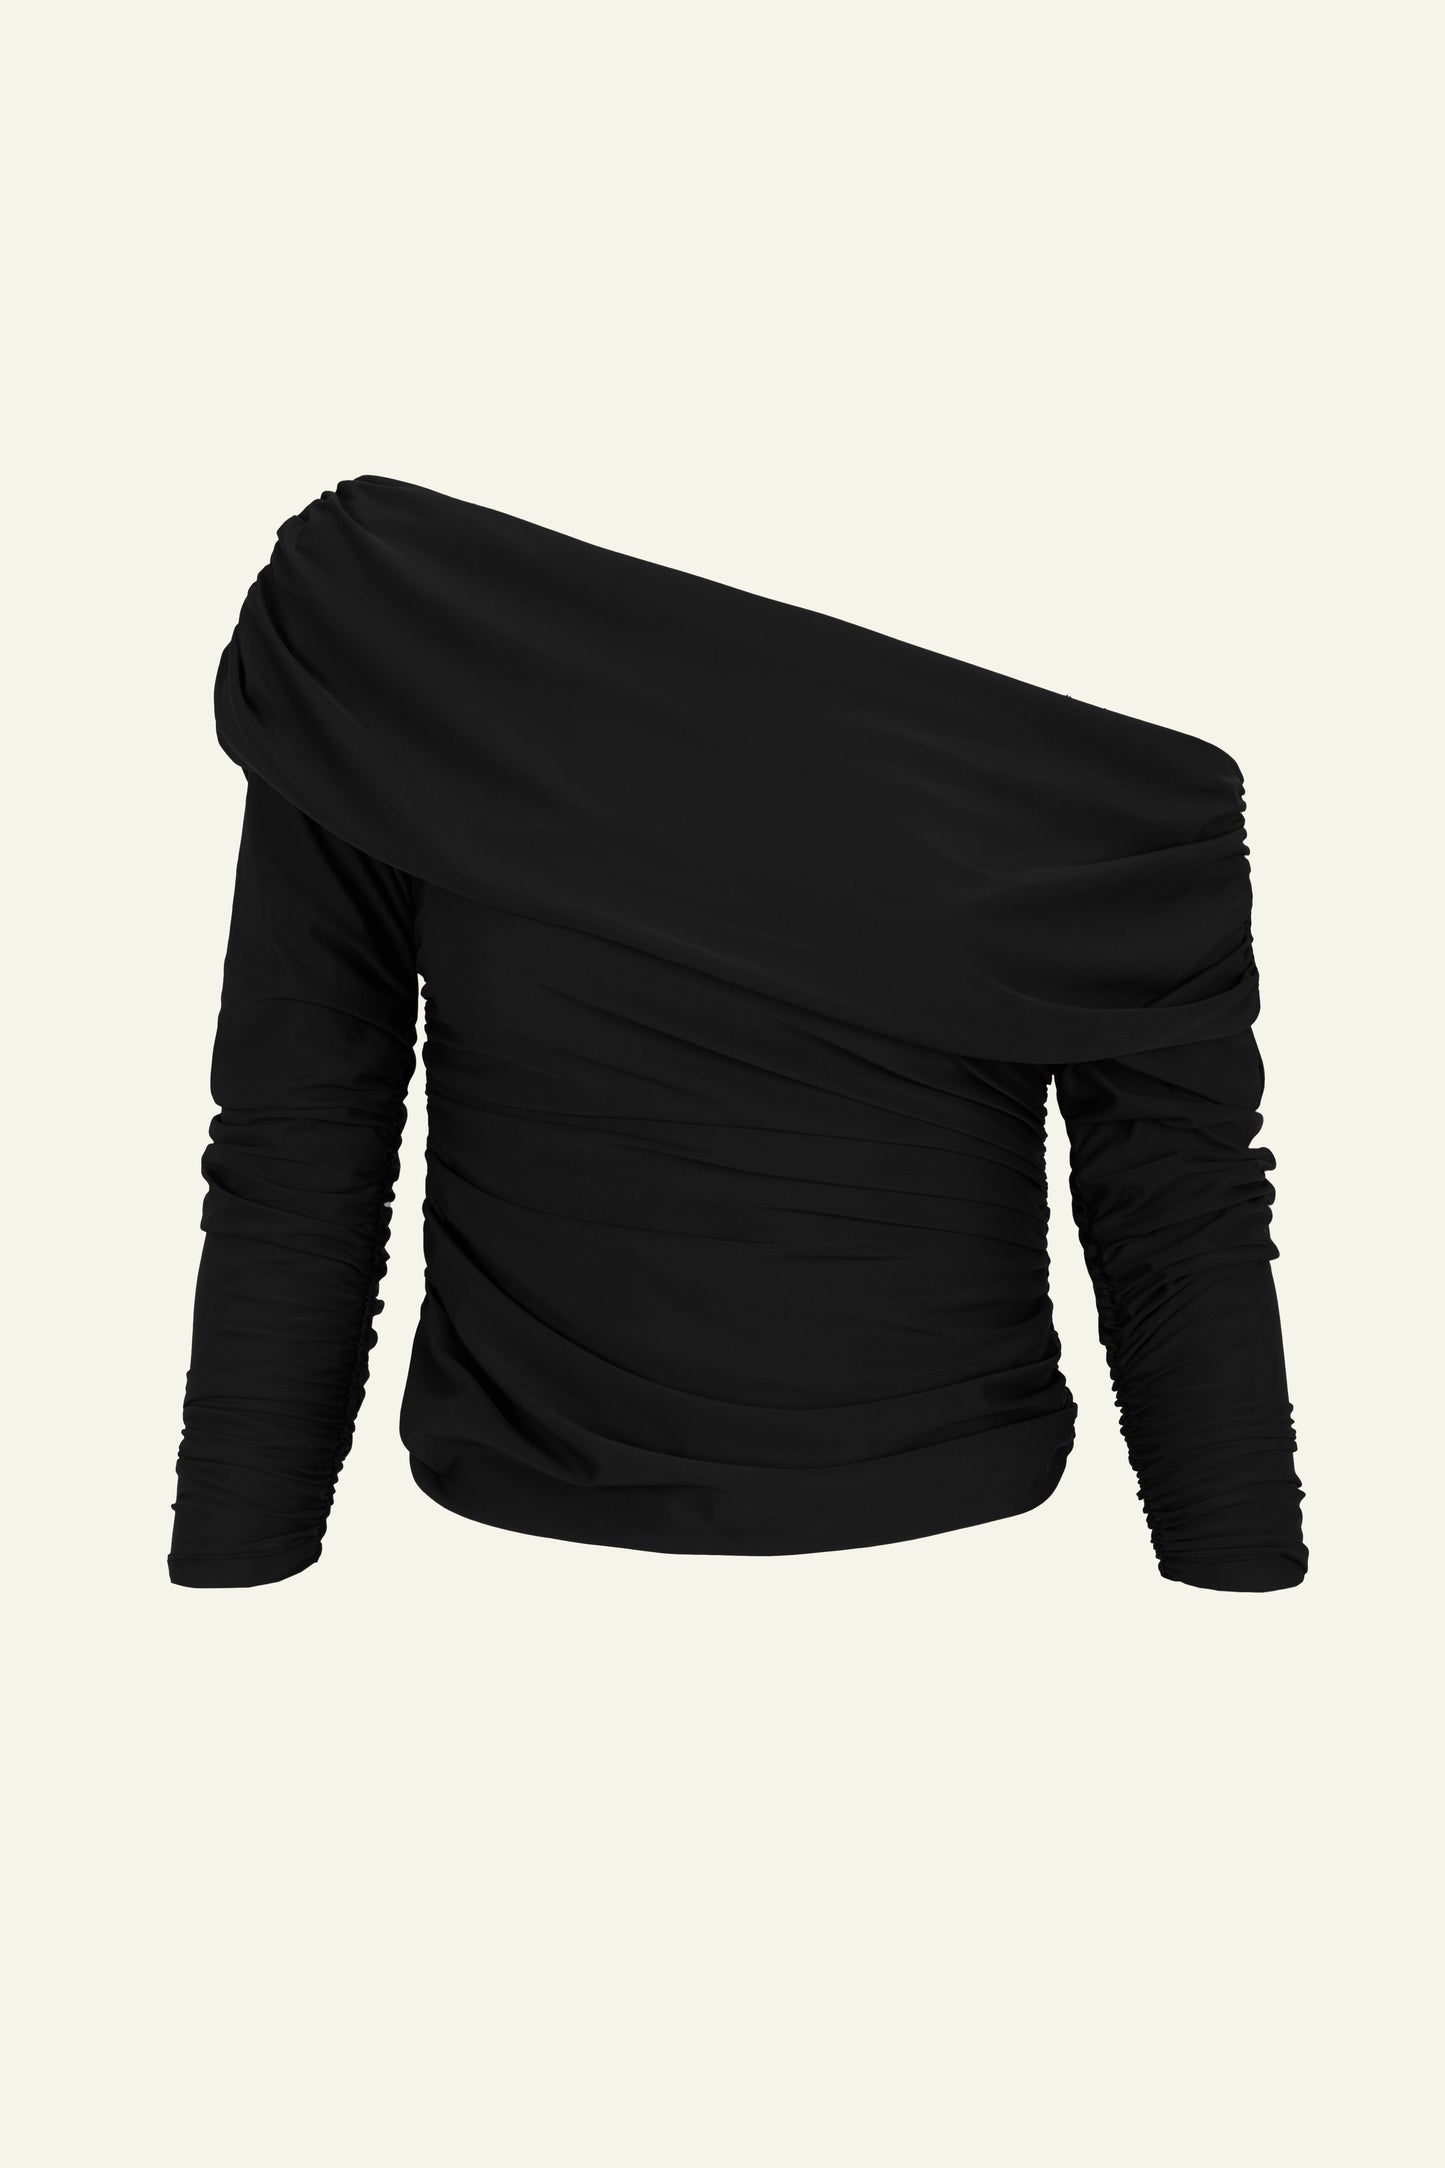 Dana Bardi Top in Black - Limited Edition